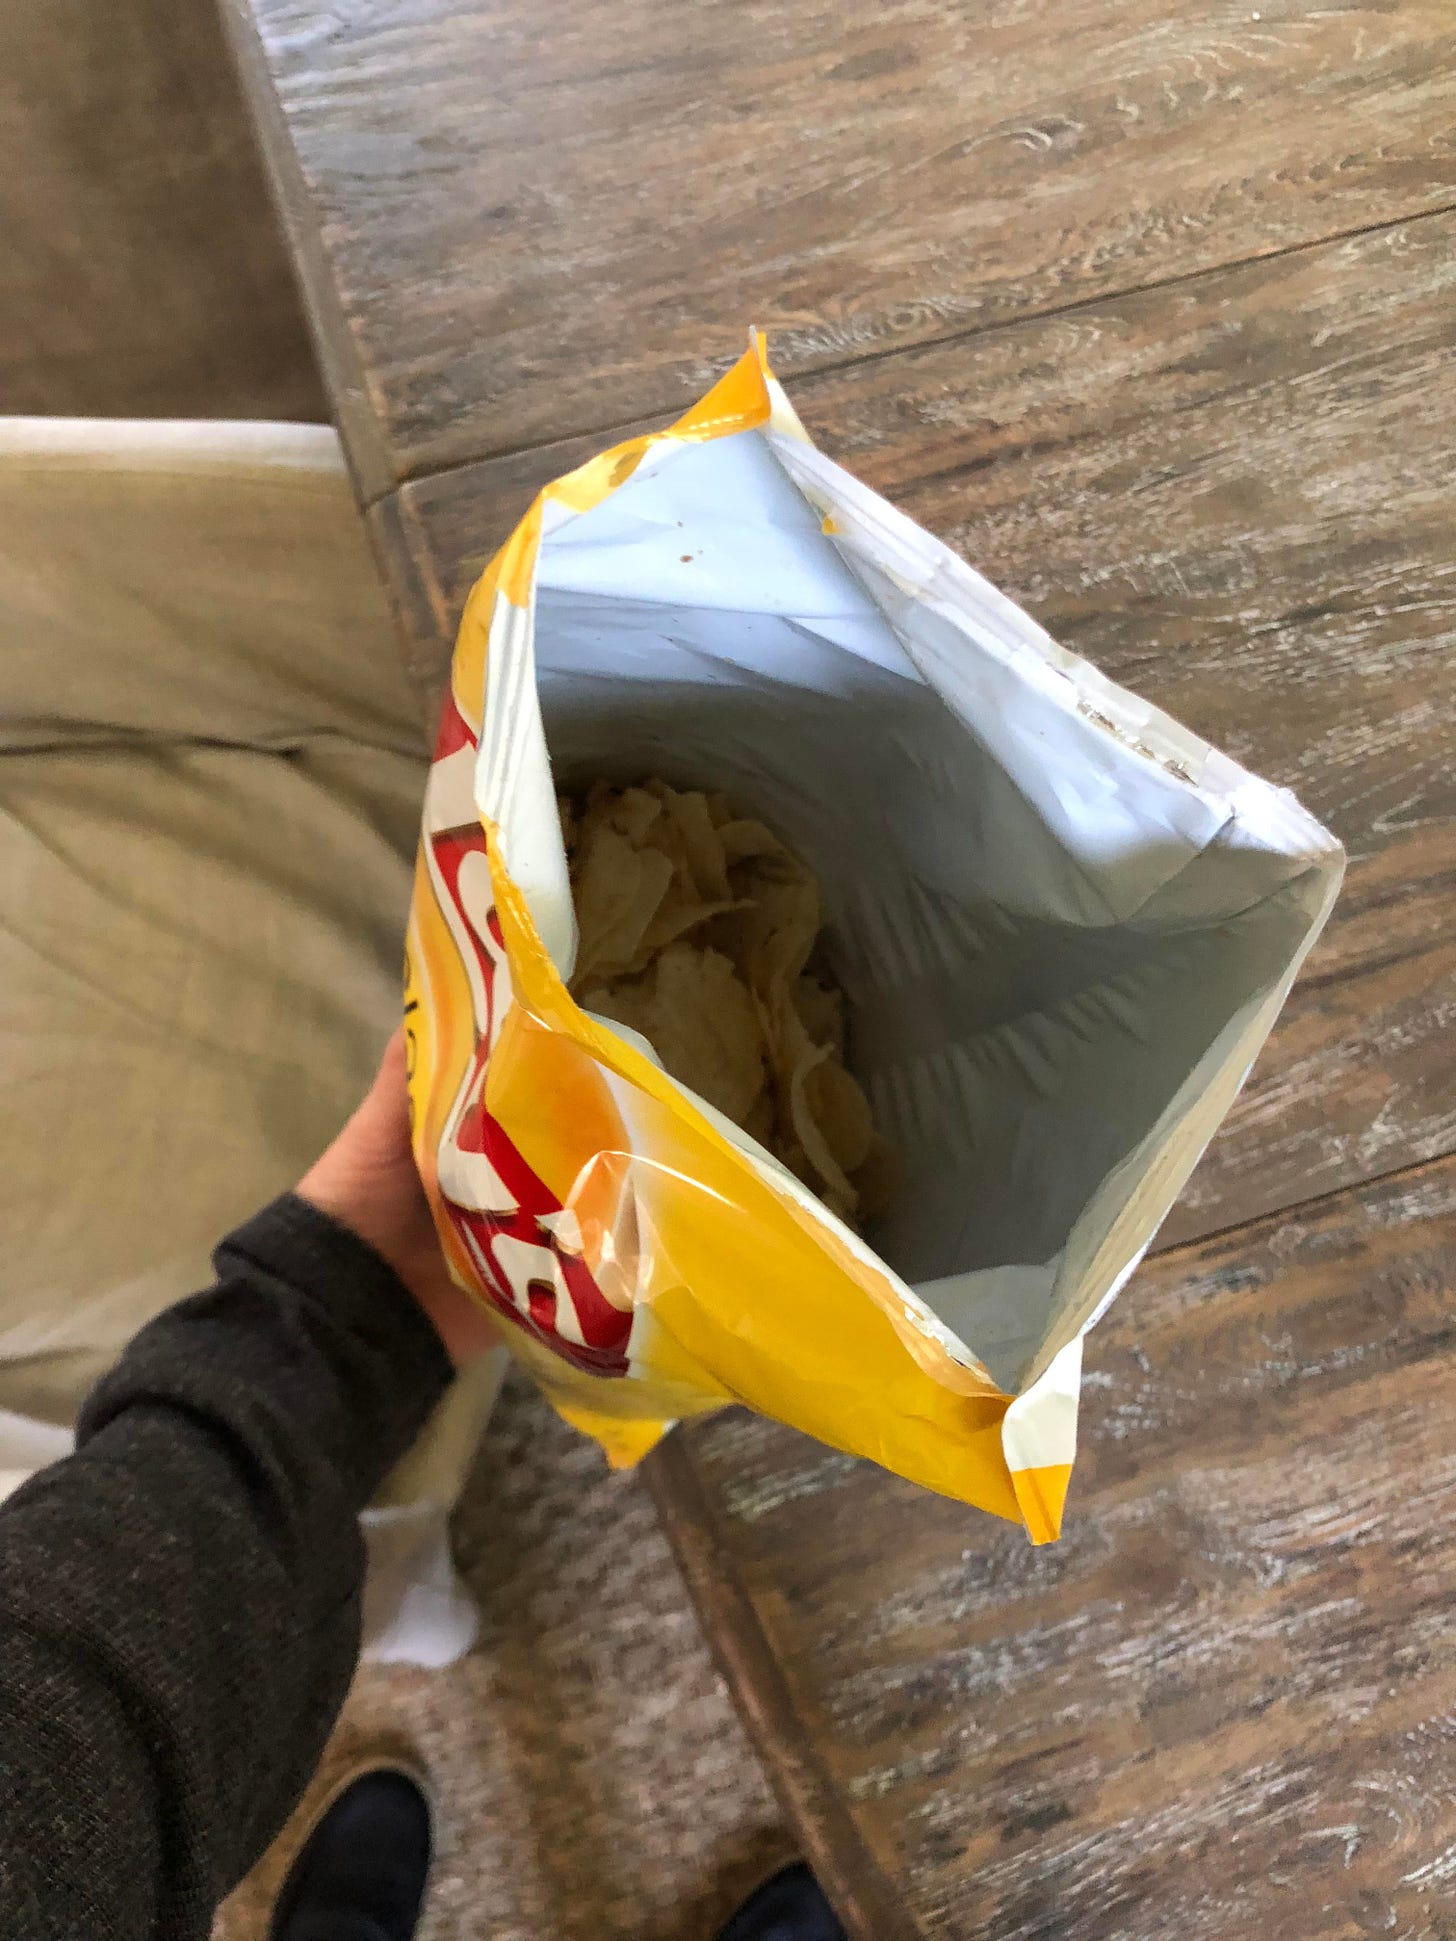 Freshly open bag of lays- half empty : r/assholedesign